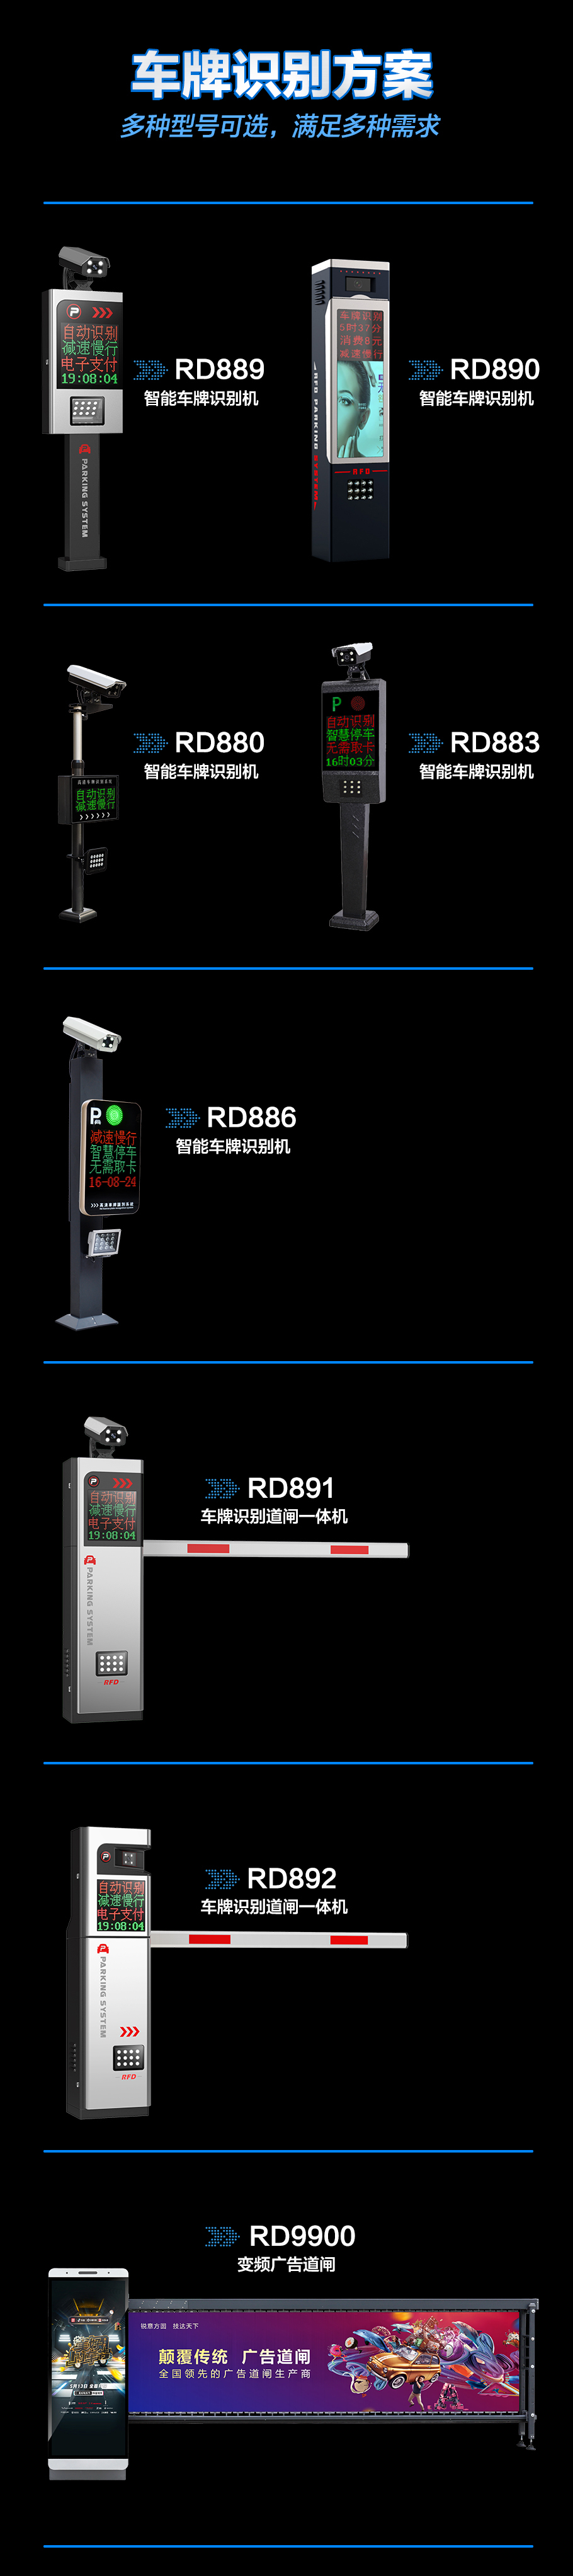 RD891车辆识别系统